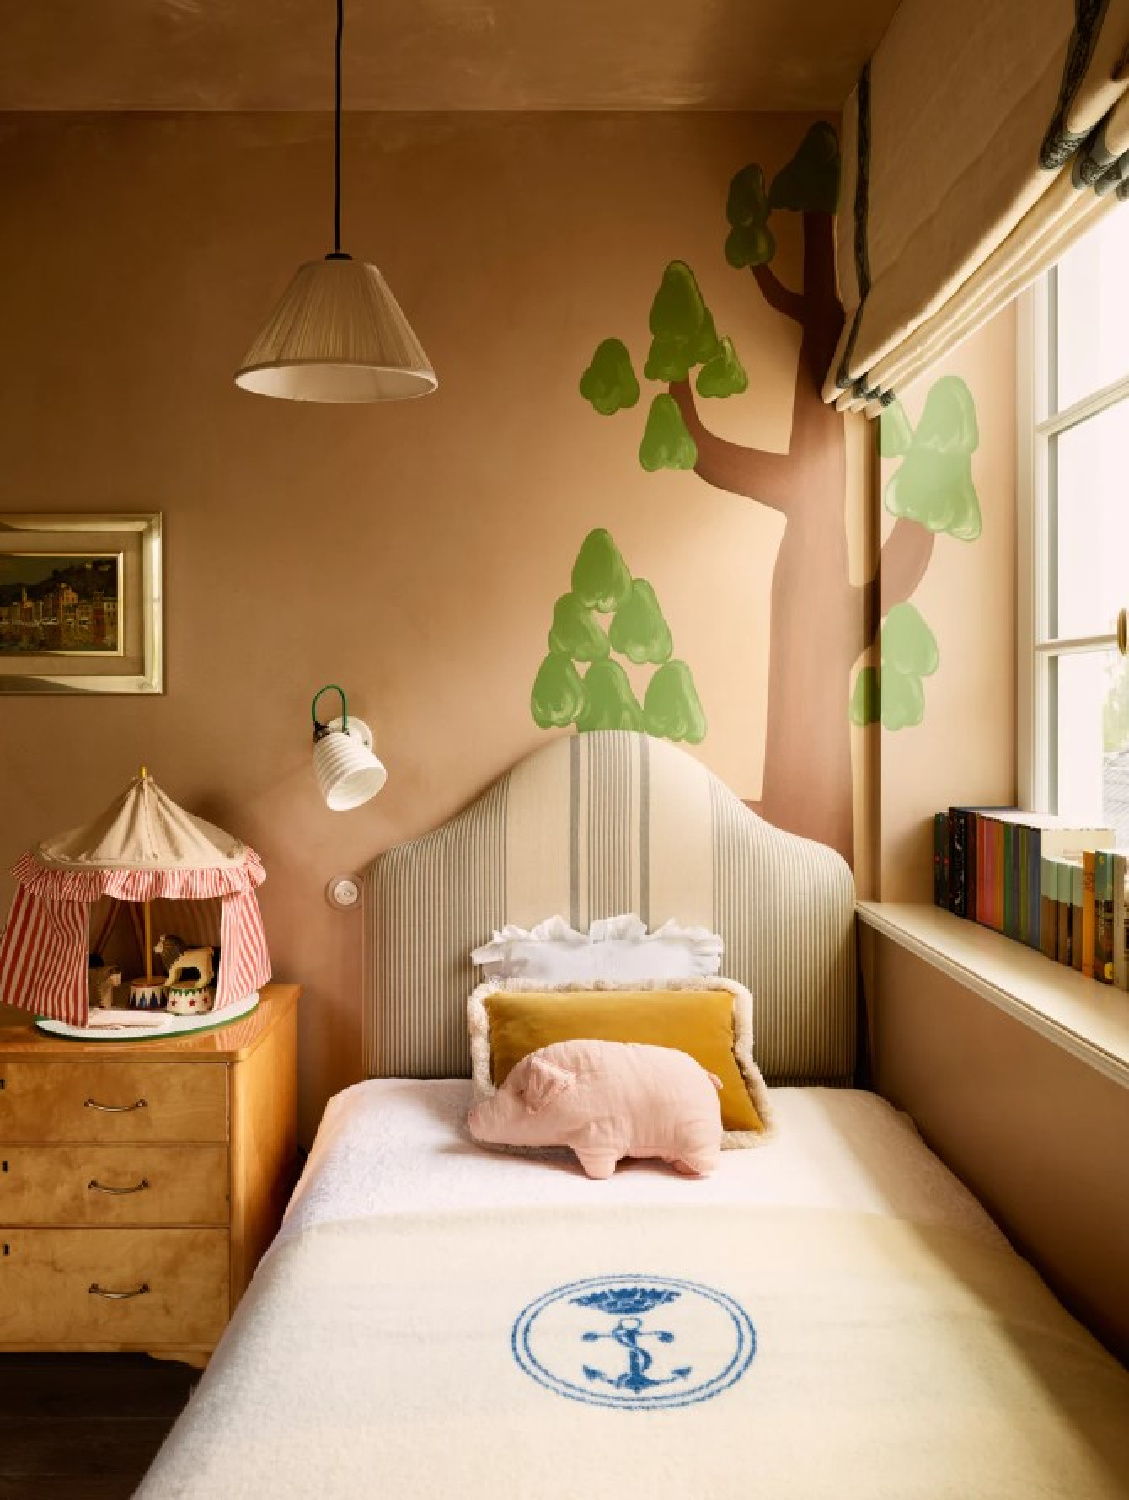 Lindo quarto infantil com mural de parede - foto de Robert Reiger e design de interiores Beata Human.  #beataheuman #swedishfarmhouse #farrowandballsettingplaster